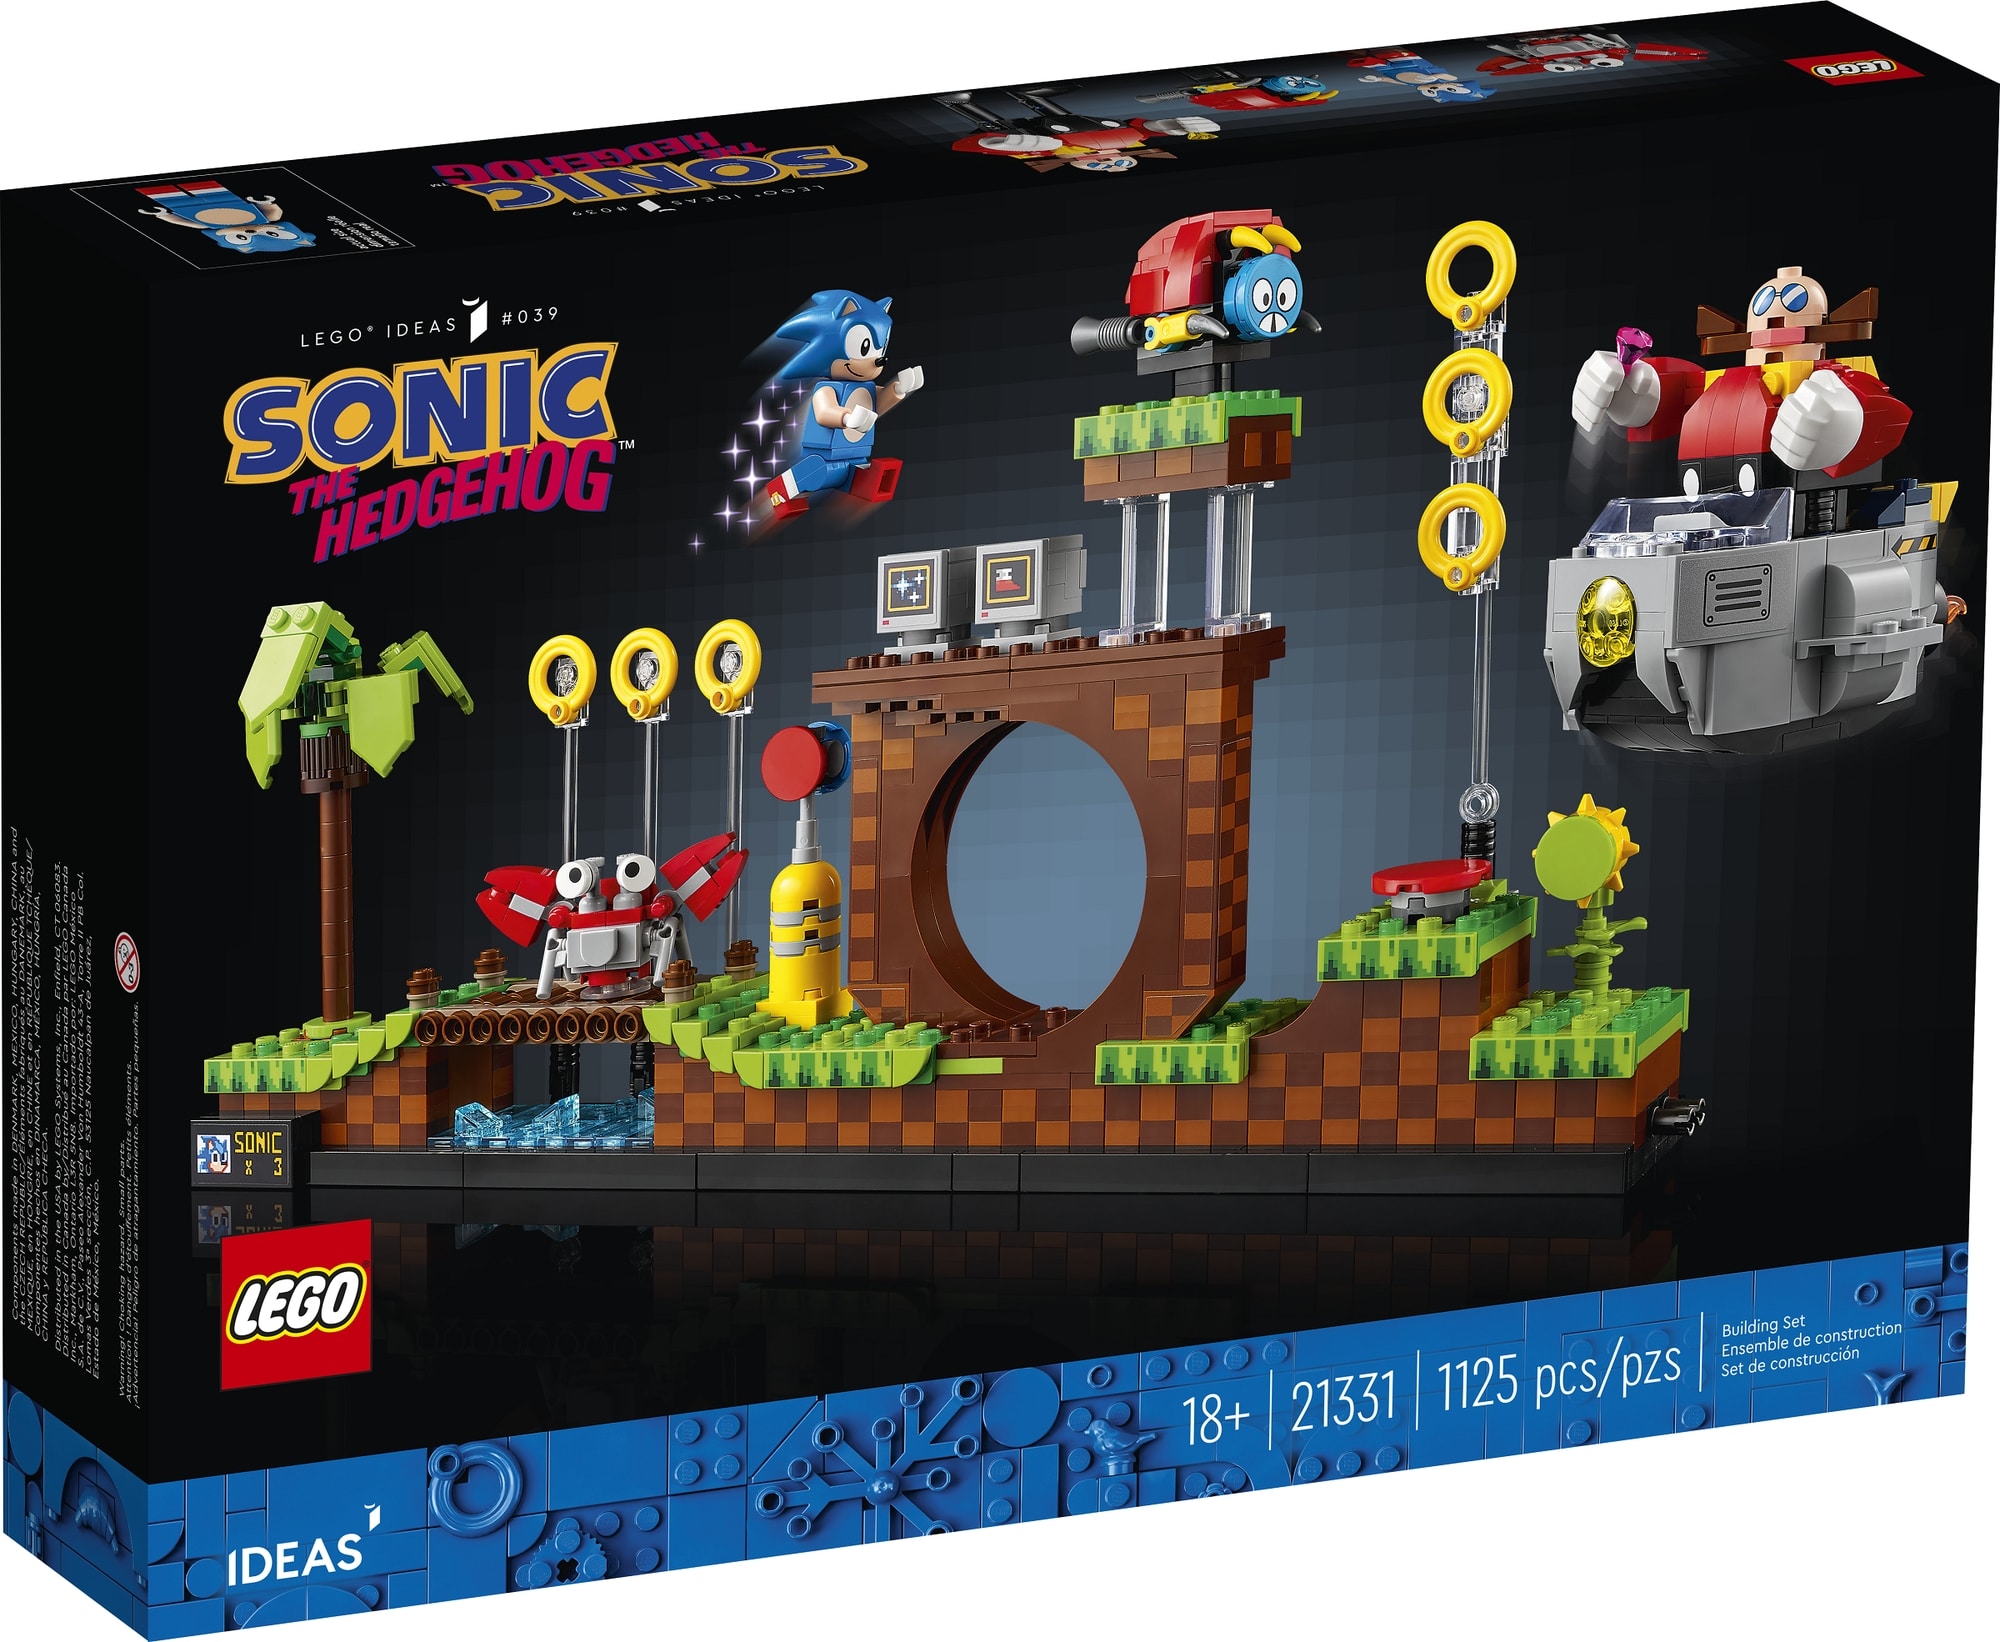 LEGO Ideas 21331 Sonic The Hedgehog Green Hill Zone 7